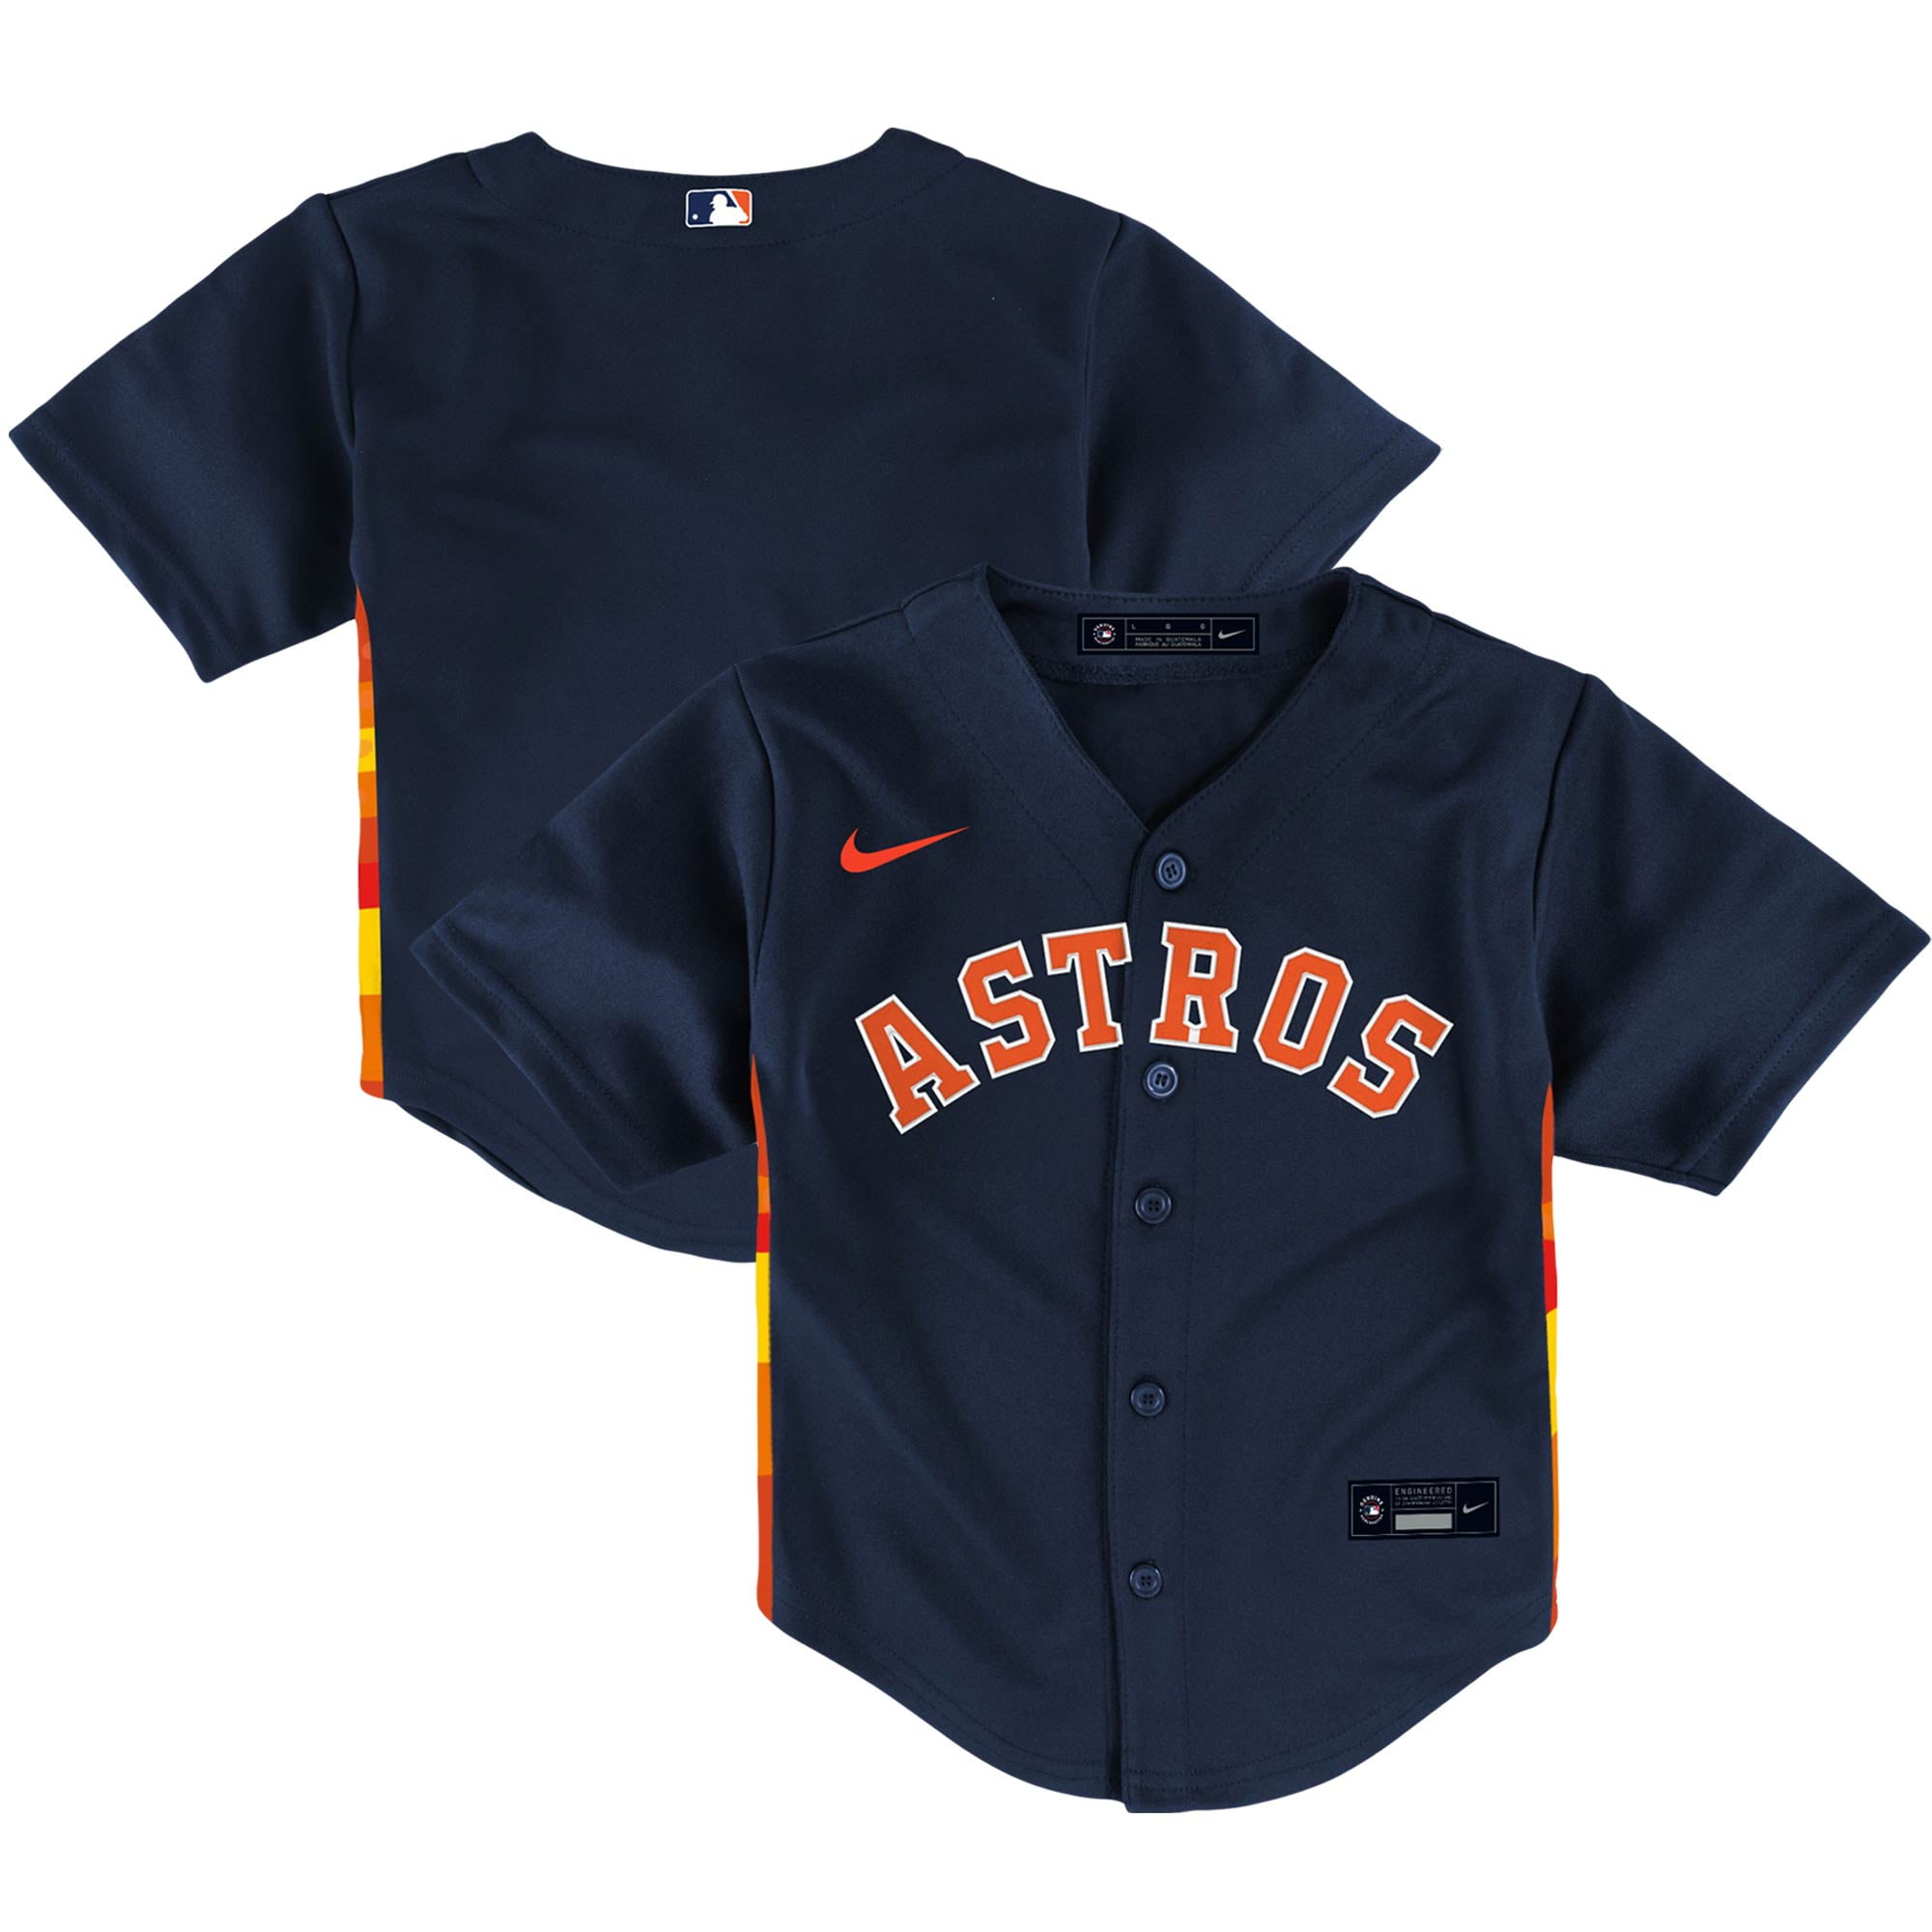 astros replica jersey